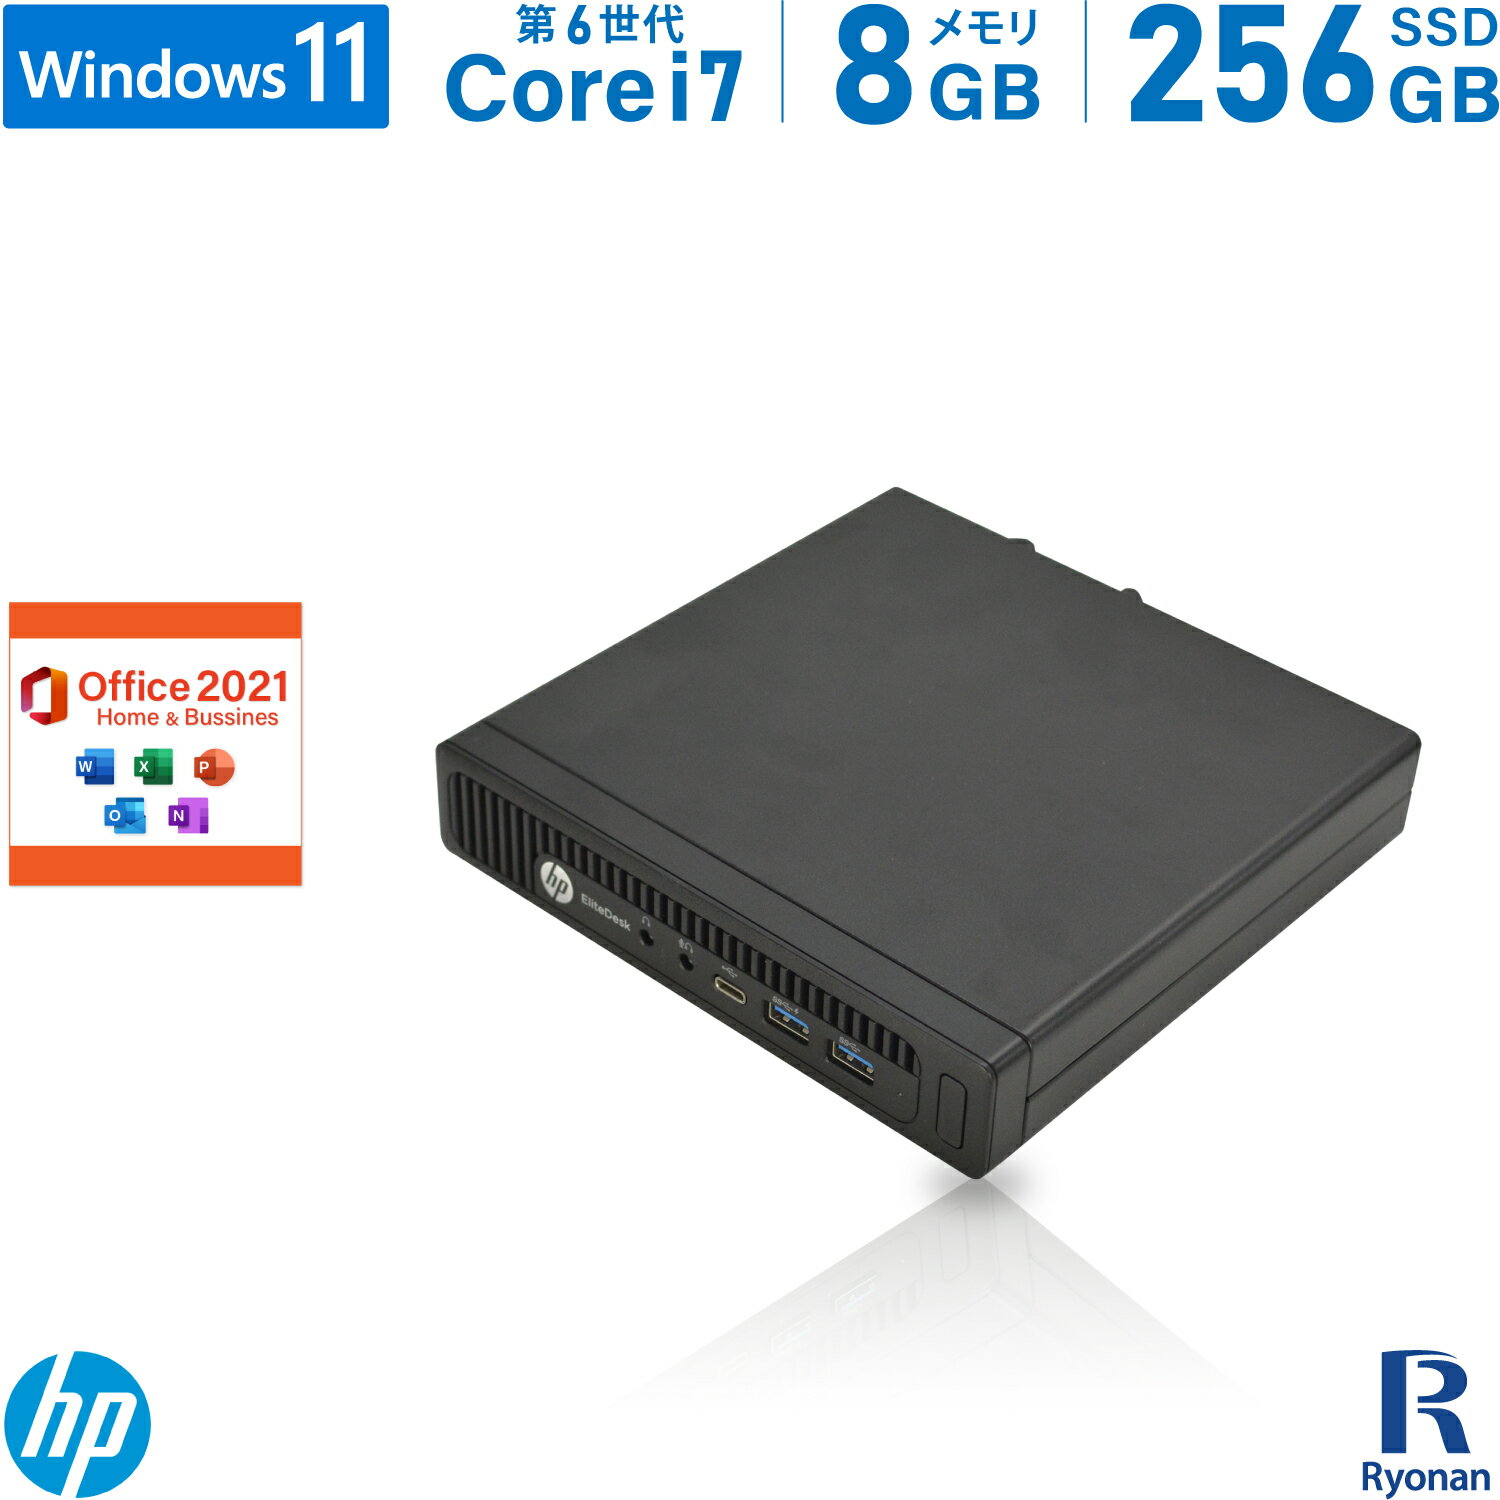 【10 OFFクーポン配布中】HP EliteDesk 800 G2 DM 第6世代 Core i7 メモリ:8GB SSD:256GB デスクトップパソコン Microsoft Office 2021搭載 USB 3.0 Type-C パソコン デスクトップ 中古パソコン 搭載 Windows 10 Office2021 無線LAN付き ミニPC